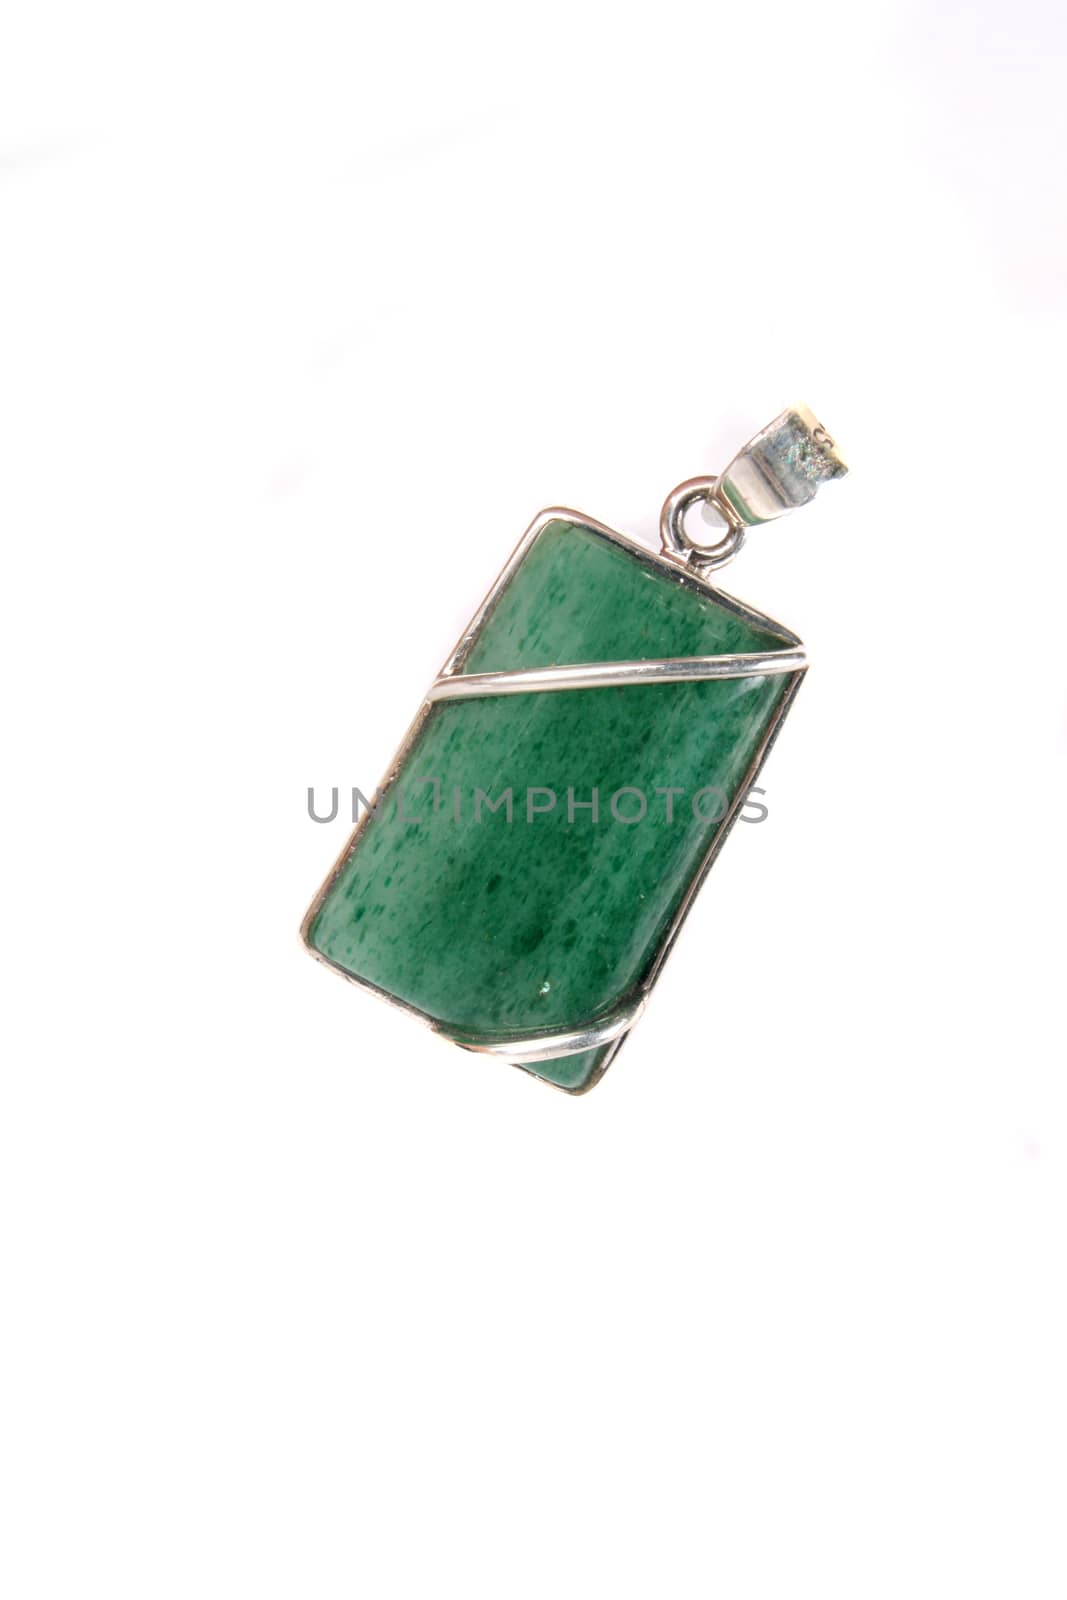 A silver pendant with a semi precious green gemstone, on white studio background.